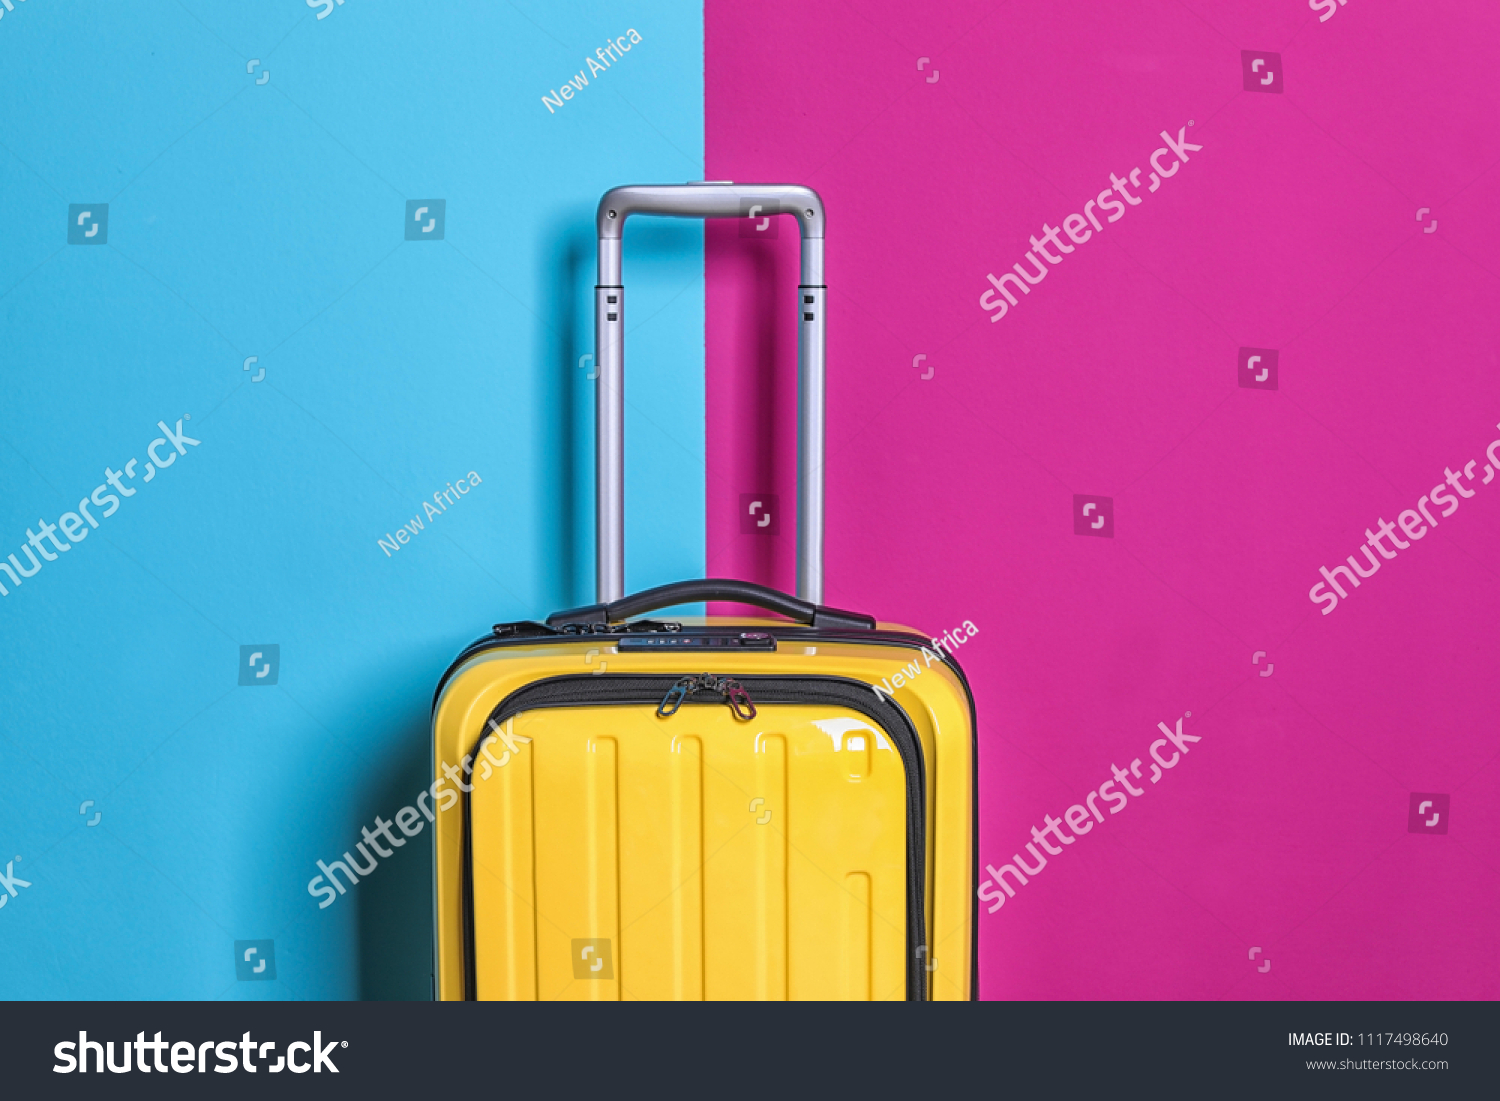 bright yellow luggage